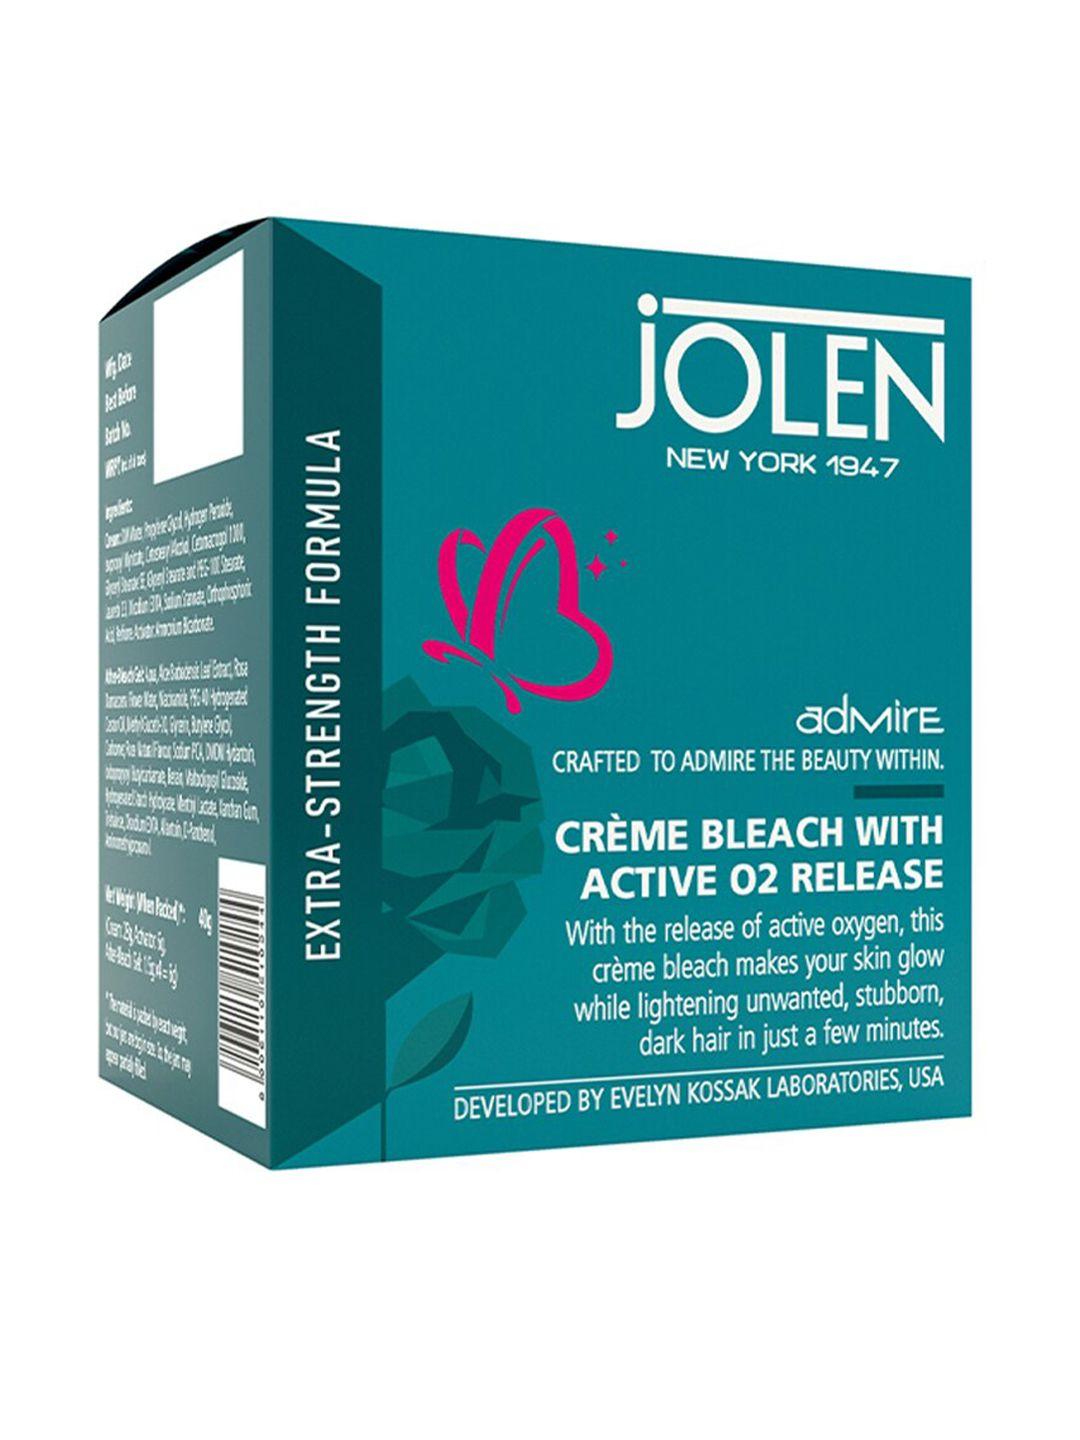 jolen new york admire crme bleach with active 02 release - 247g